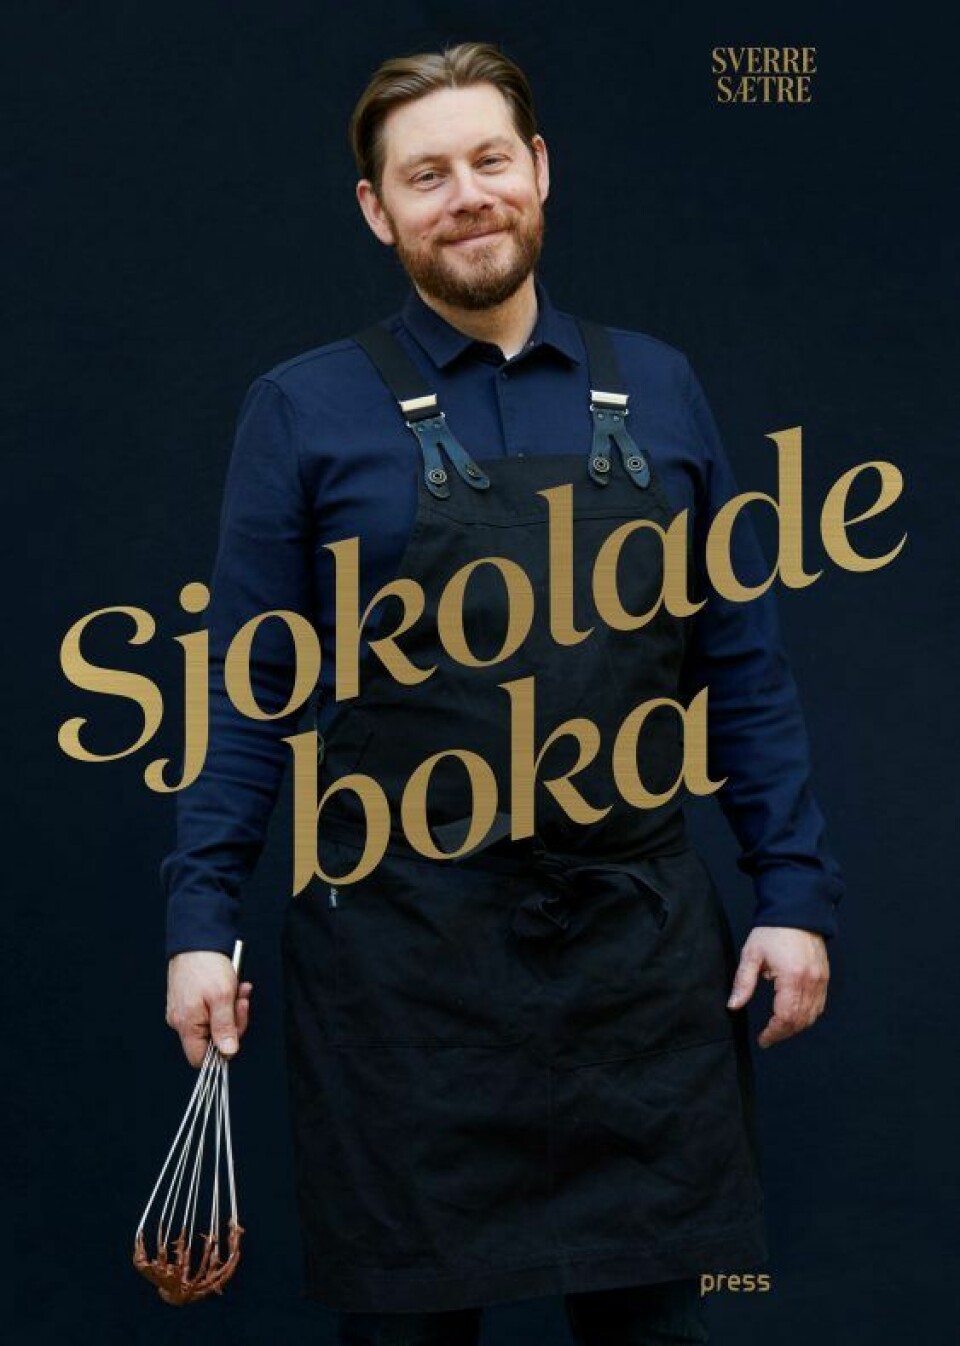 Sjokoladeboka er Sverre Sætres syvende kokebok.